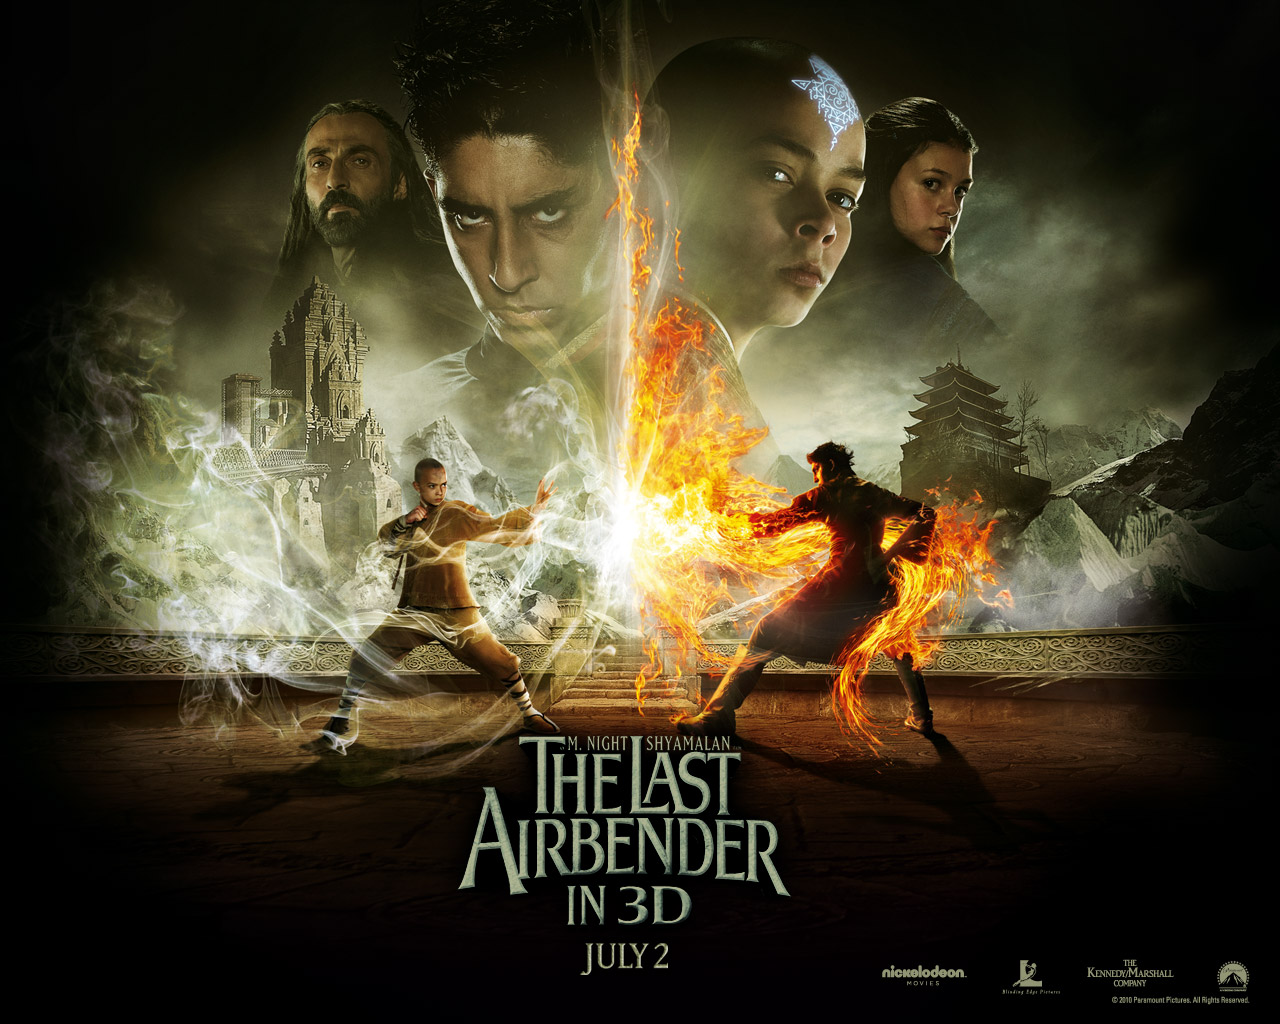 "Avatar: The Last Airbender Movie" desktop wallpaper (1280 x 1024 pixels)